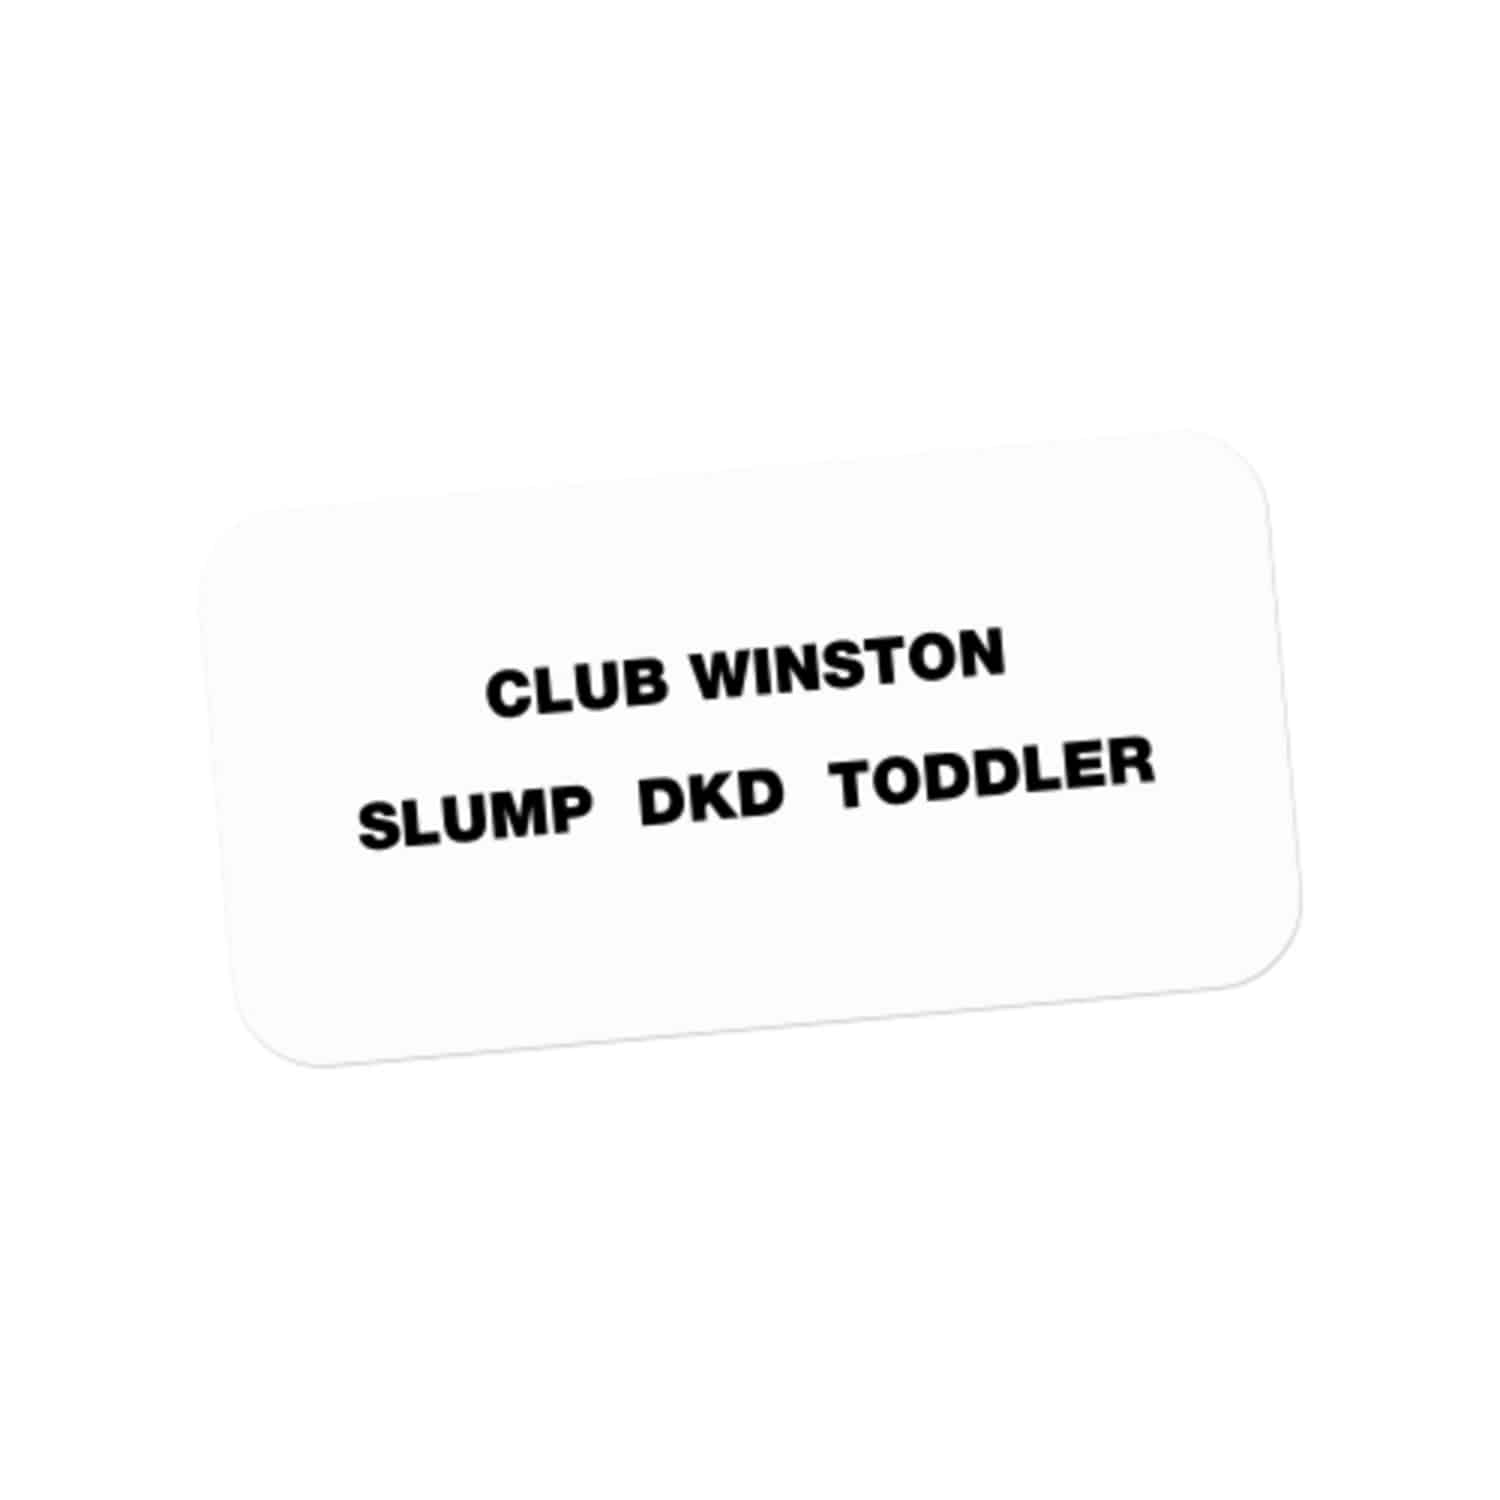 Club Winston - SLUMP DKD TODDLER